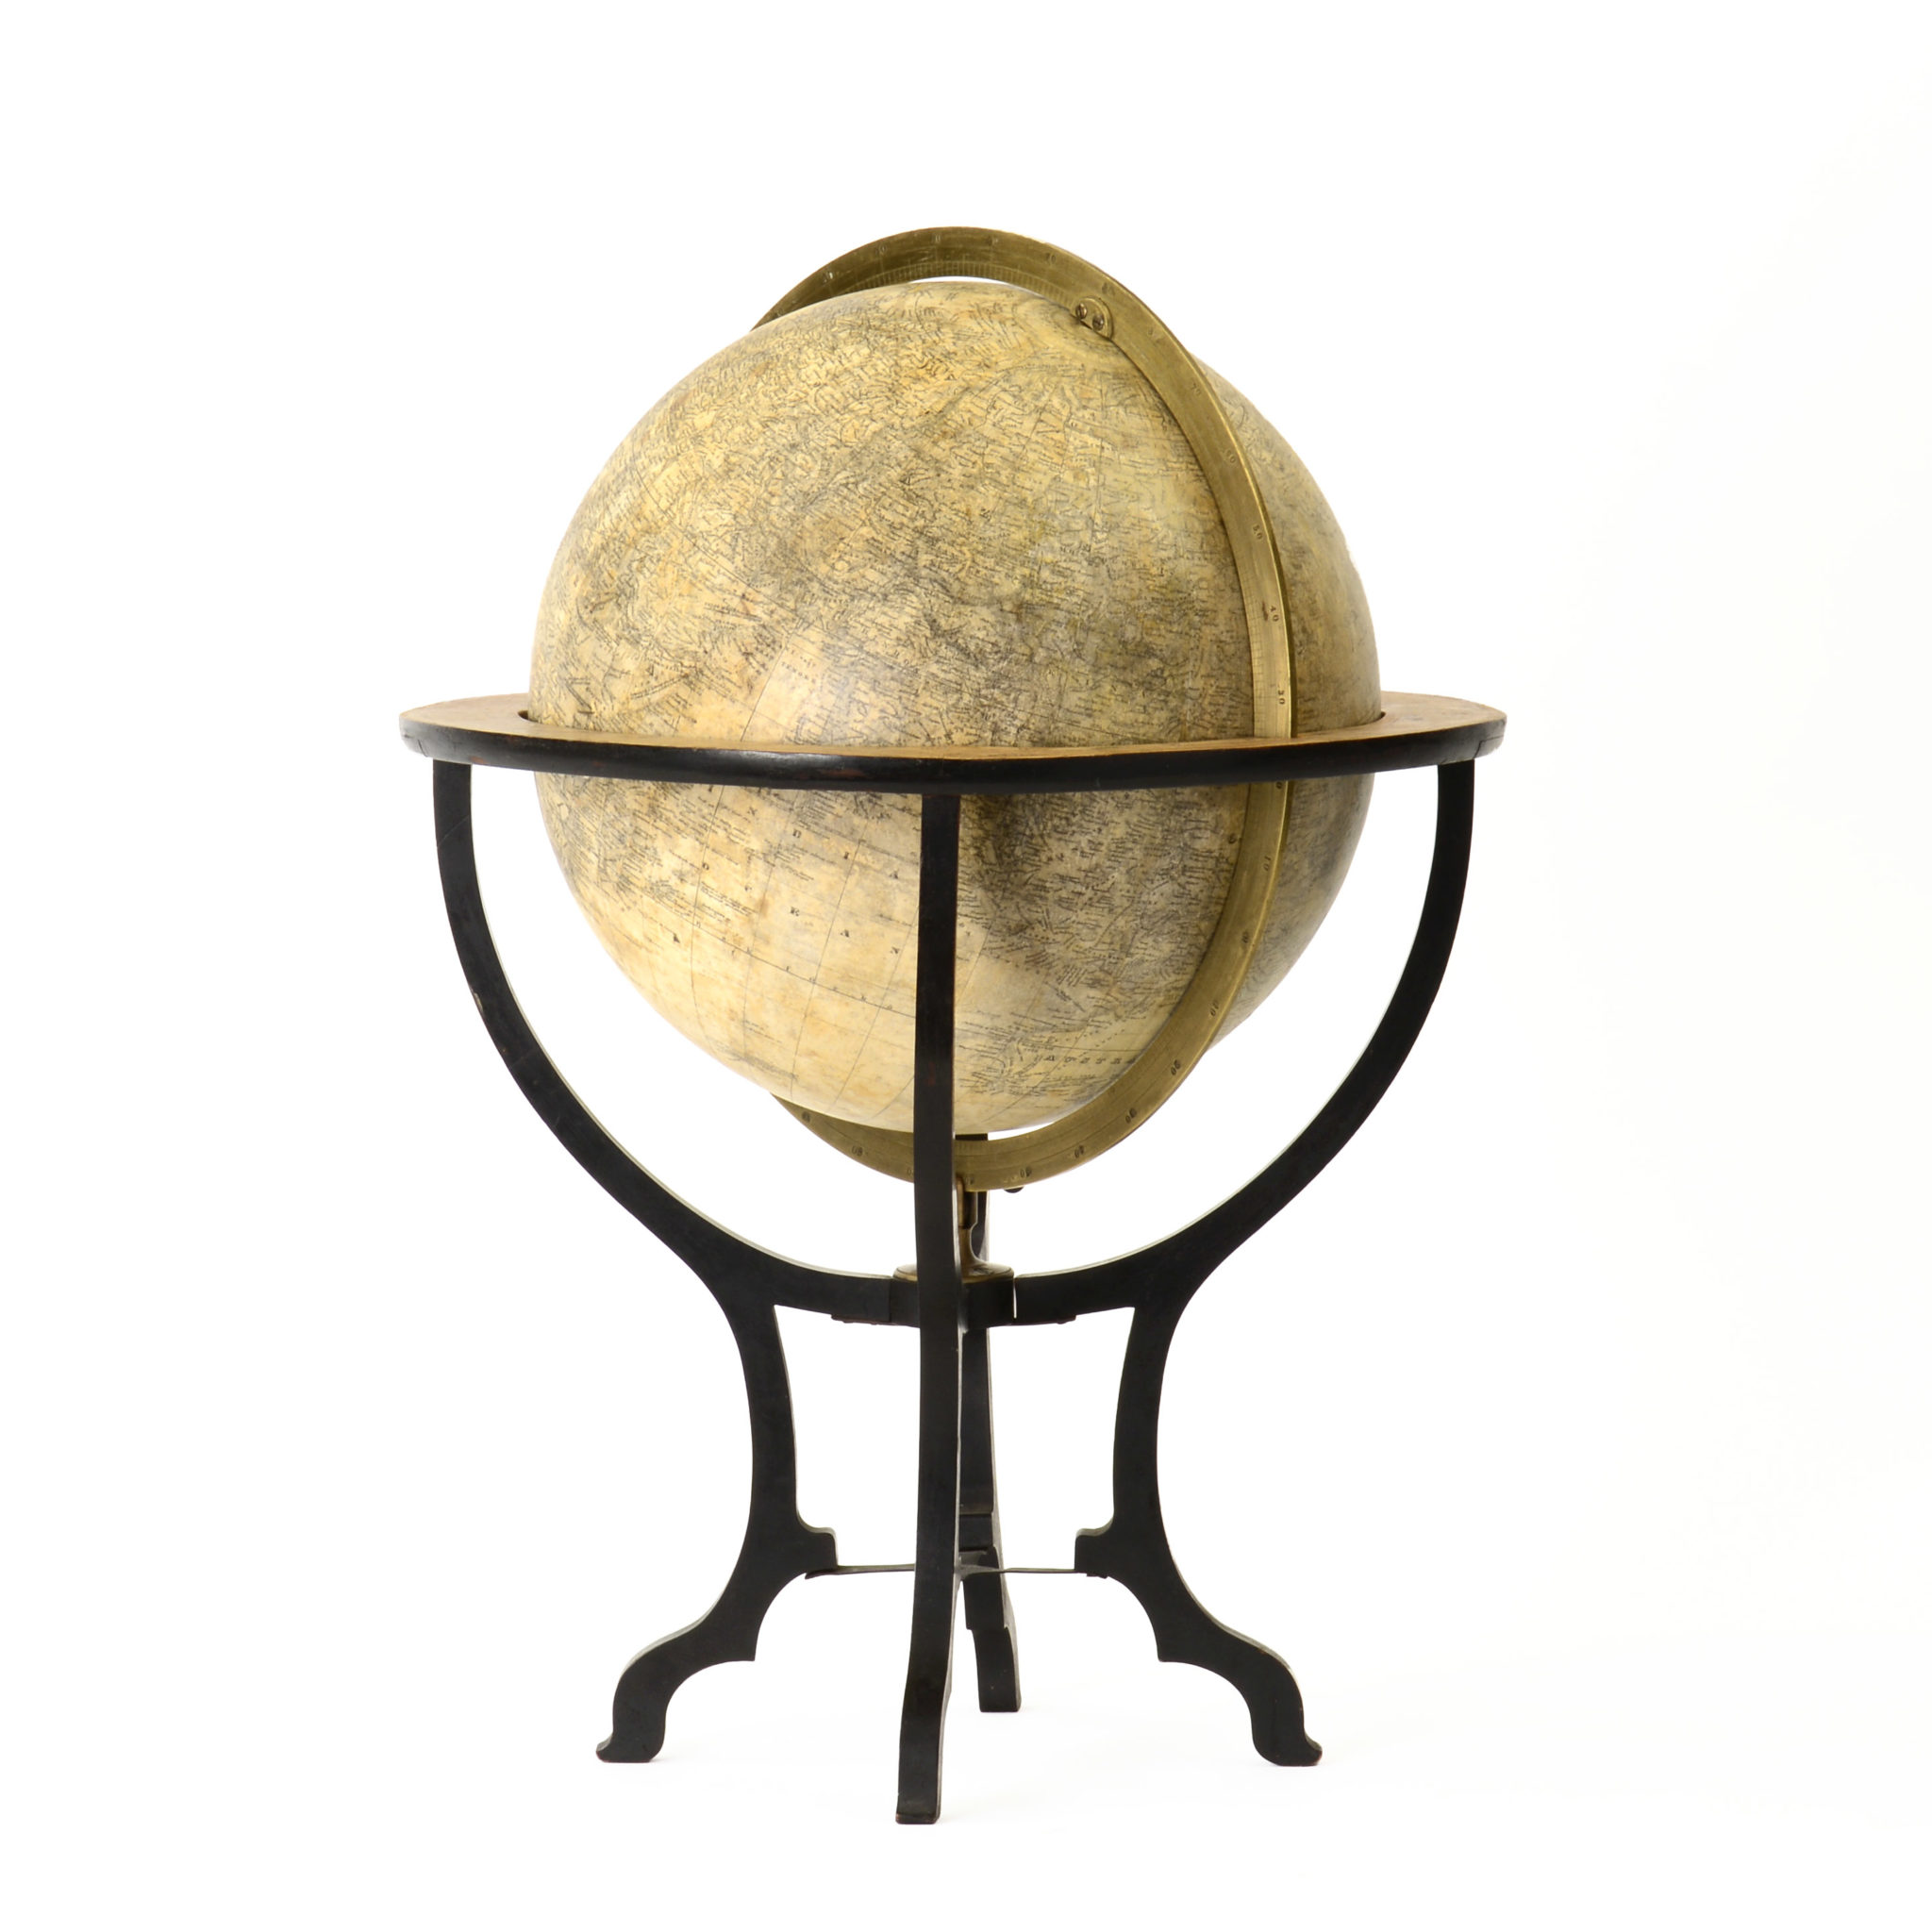 The first printed Hungarian terrestrial Globe – the BATTHYÁNY-NAGY-BILLER Globe